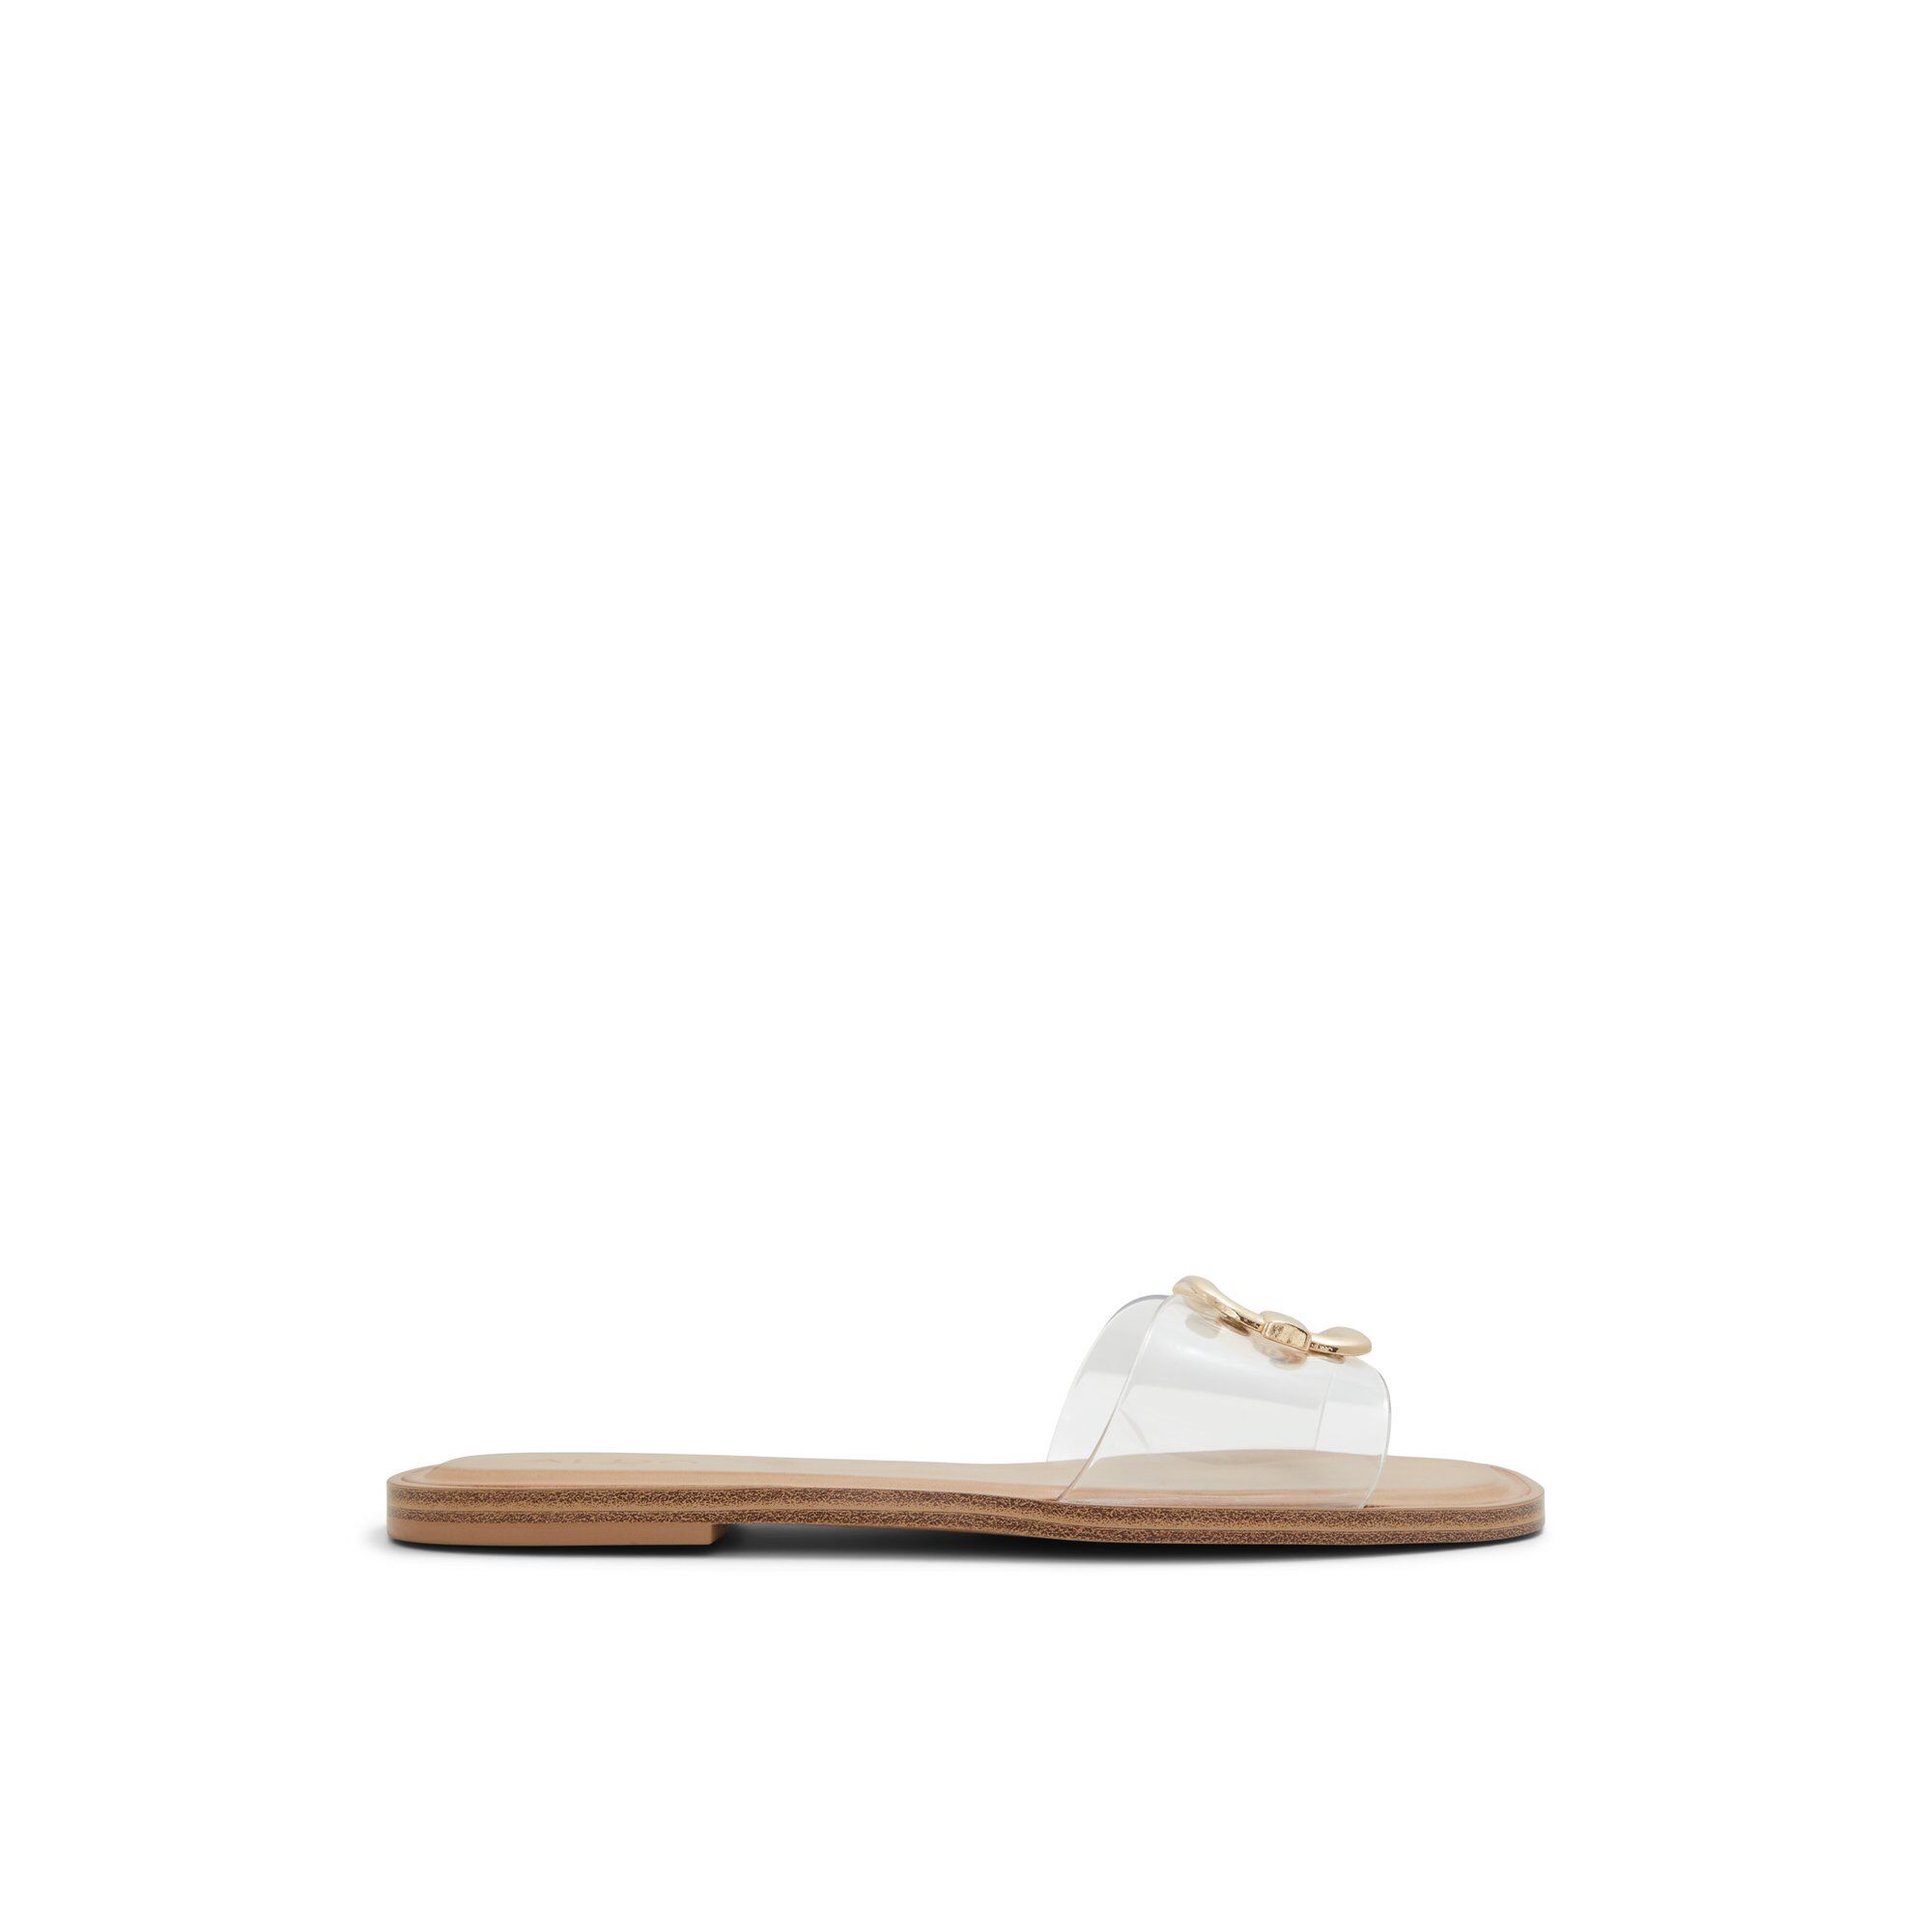 ALDO Glaeswen - Women's Flat Sandals - White, Size 10